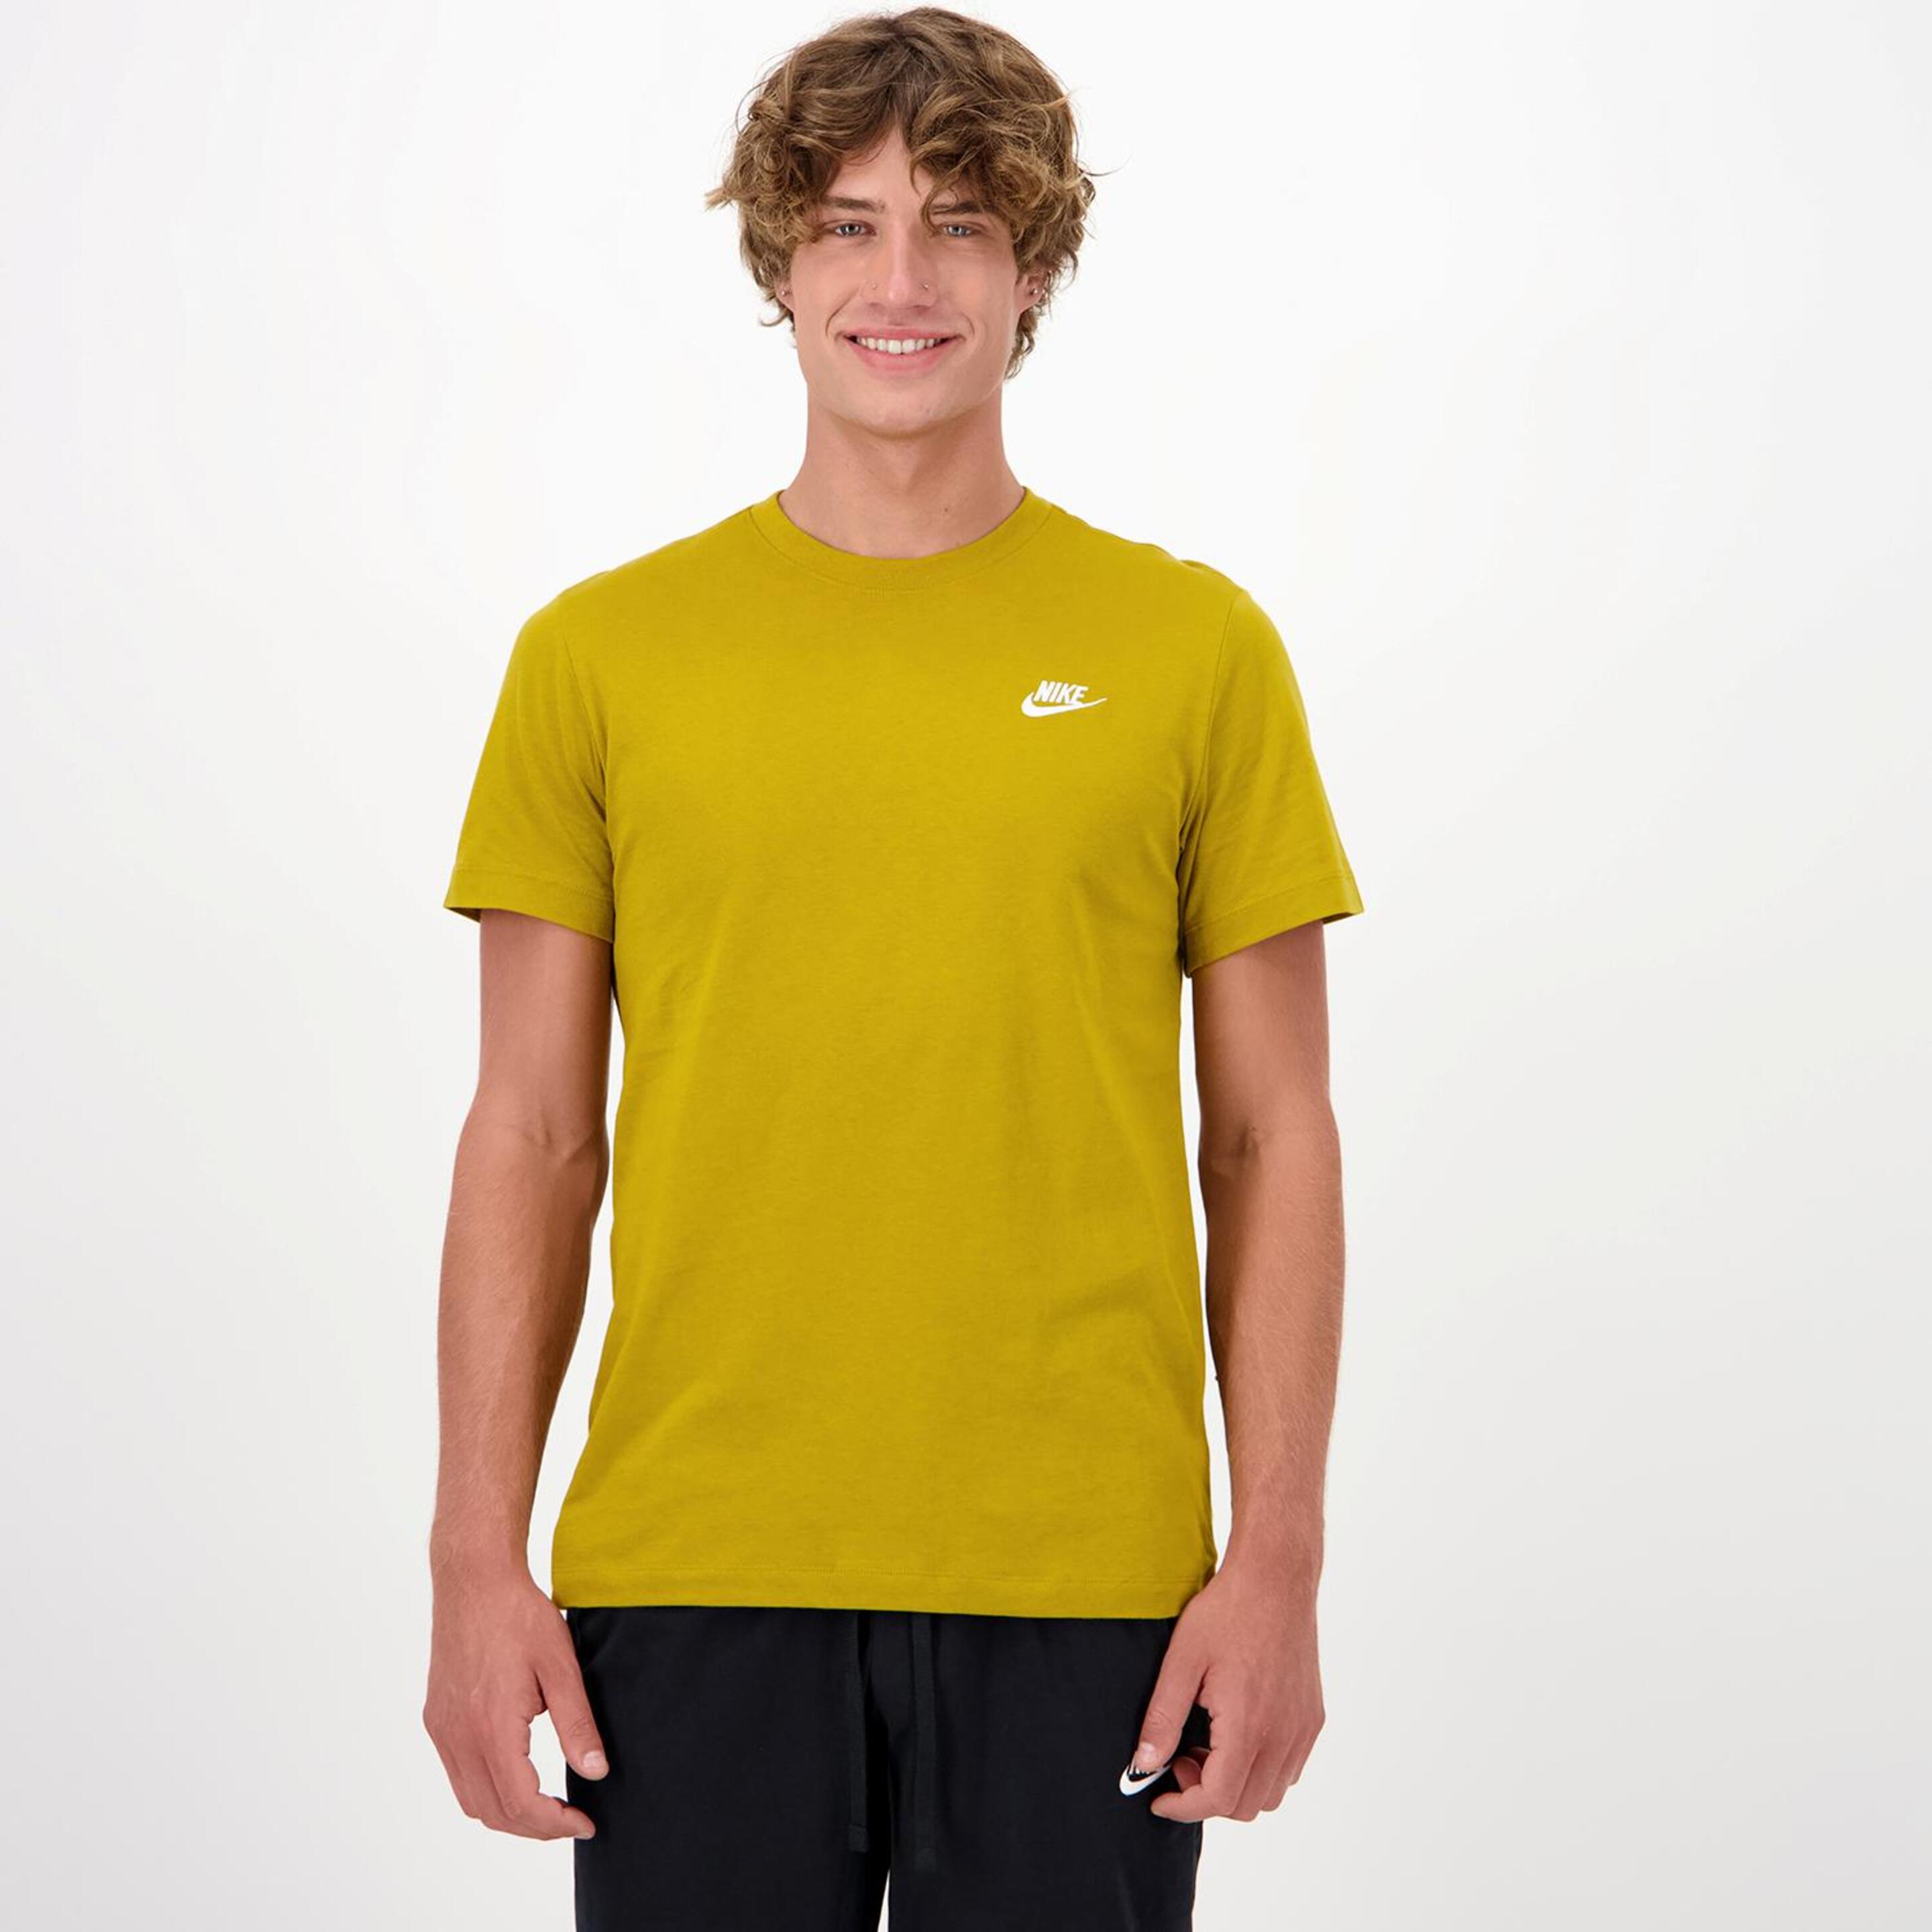 Nike Club - marron - Camiseta Hombre